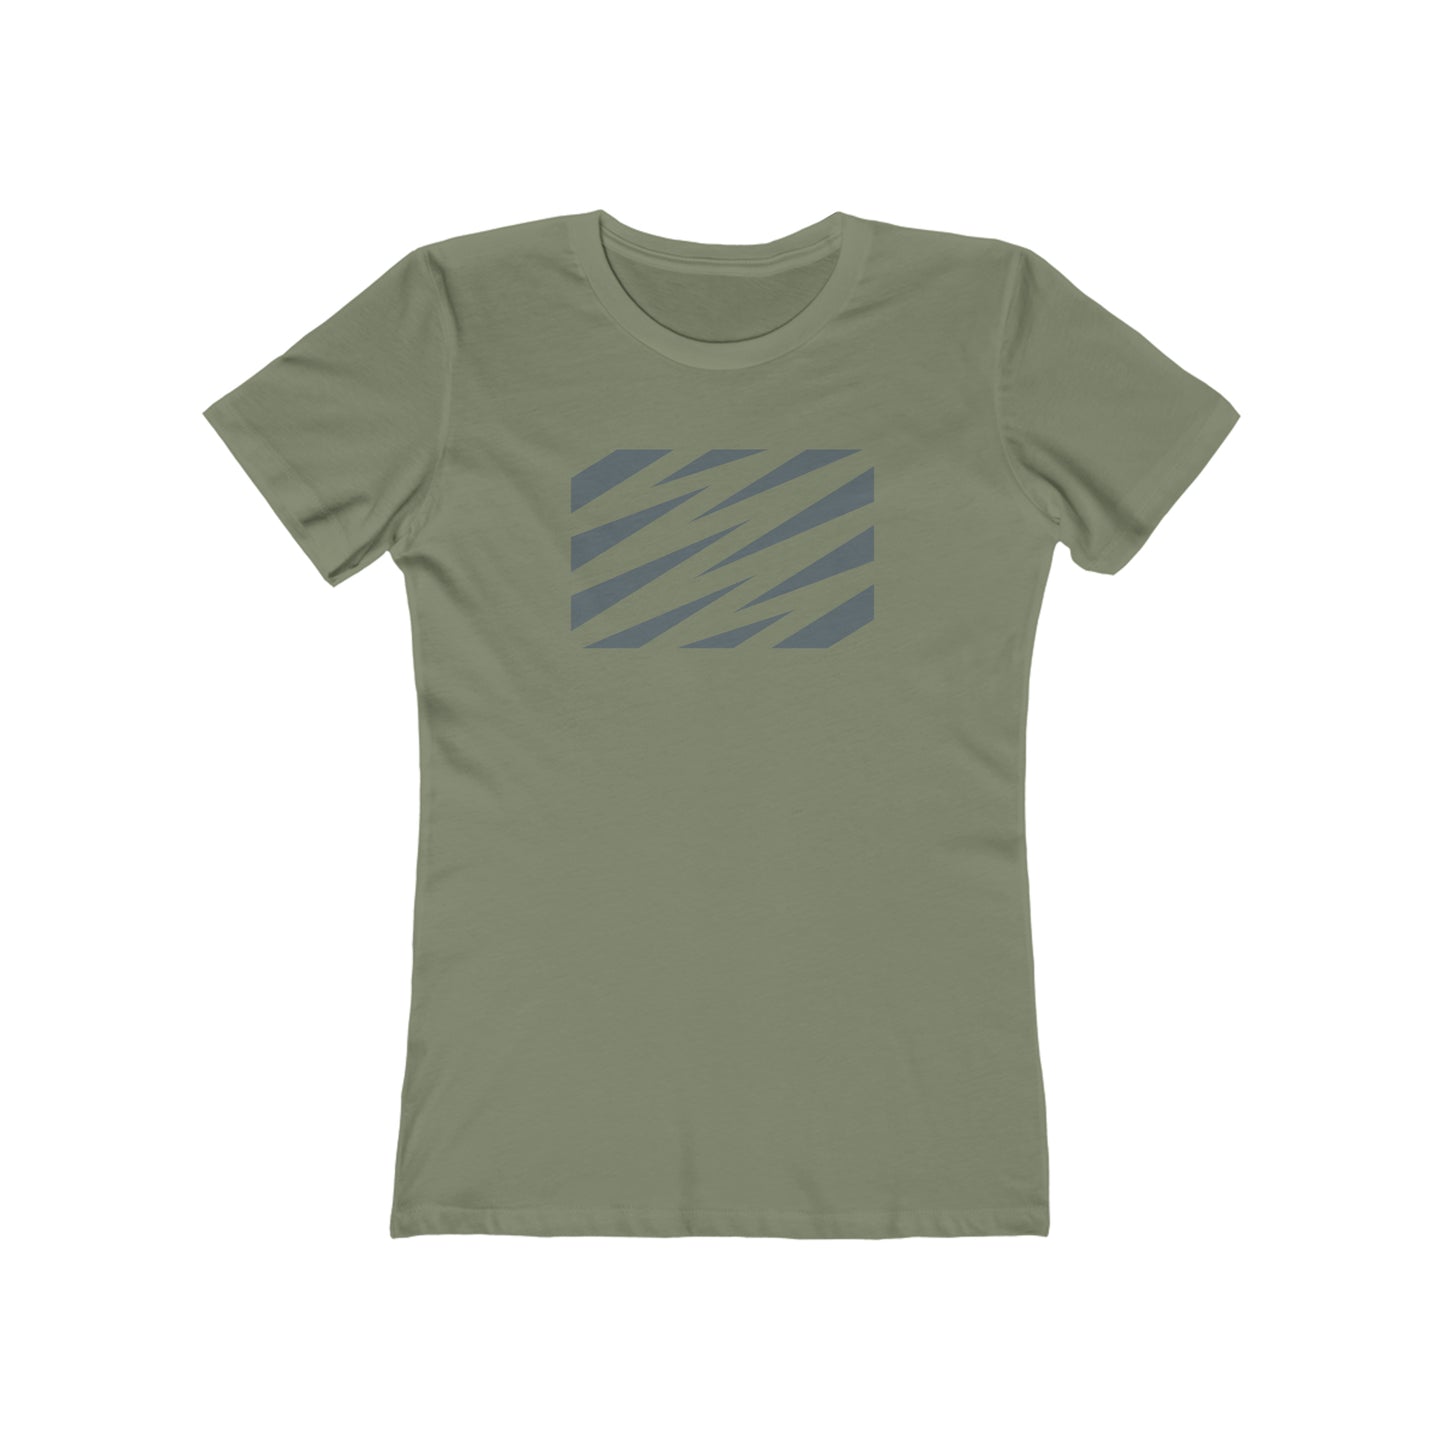 Interruption - Women's T-Shirt